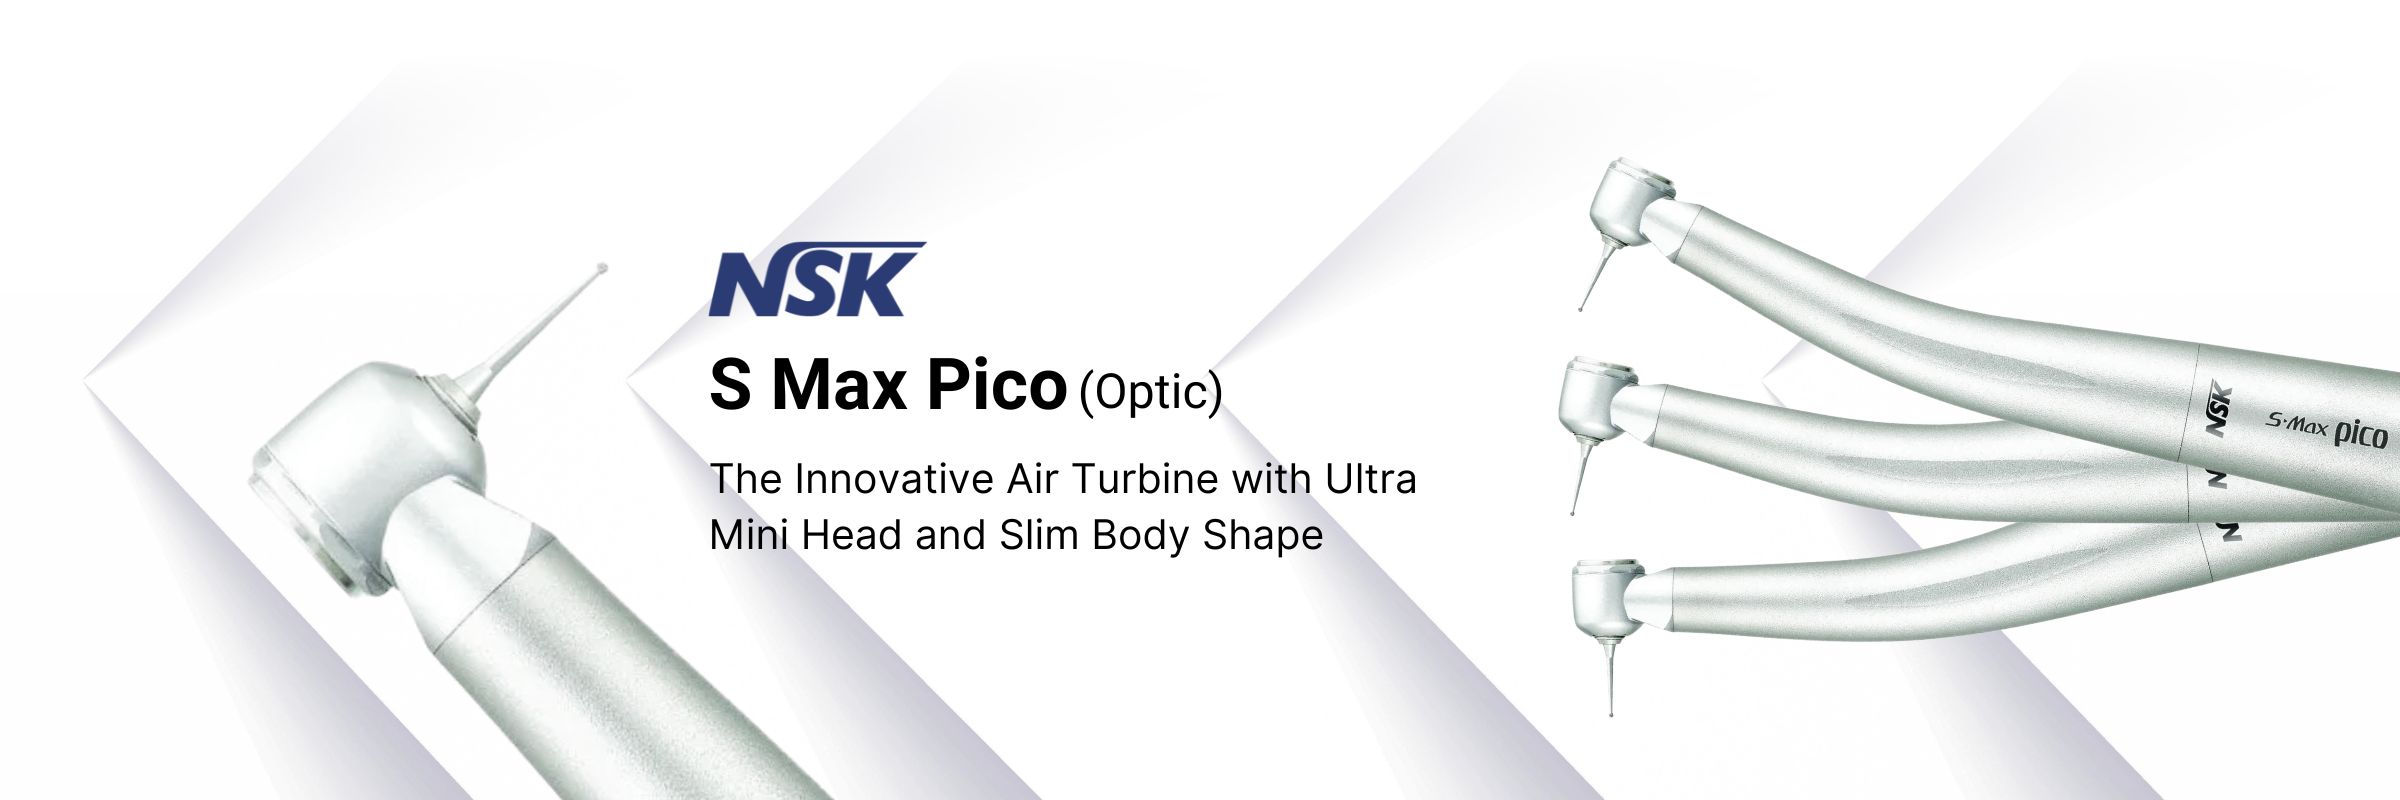 NSK S Max Pico Optic Banner